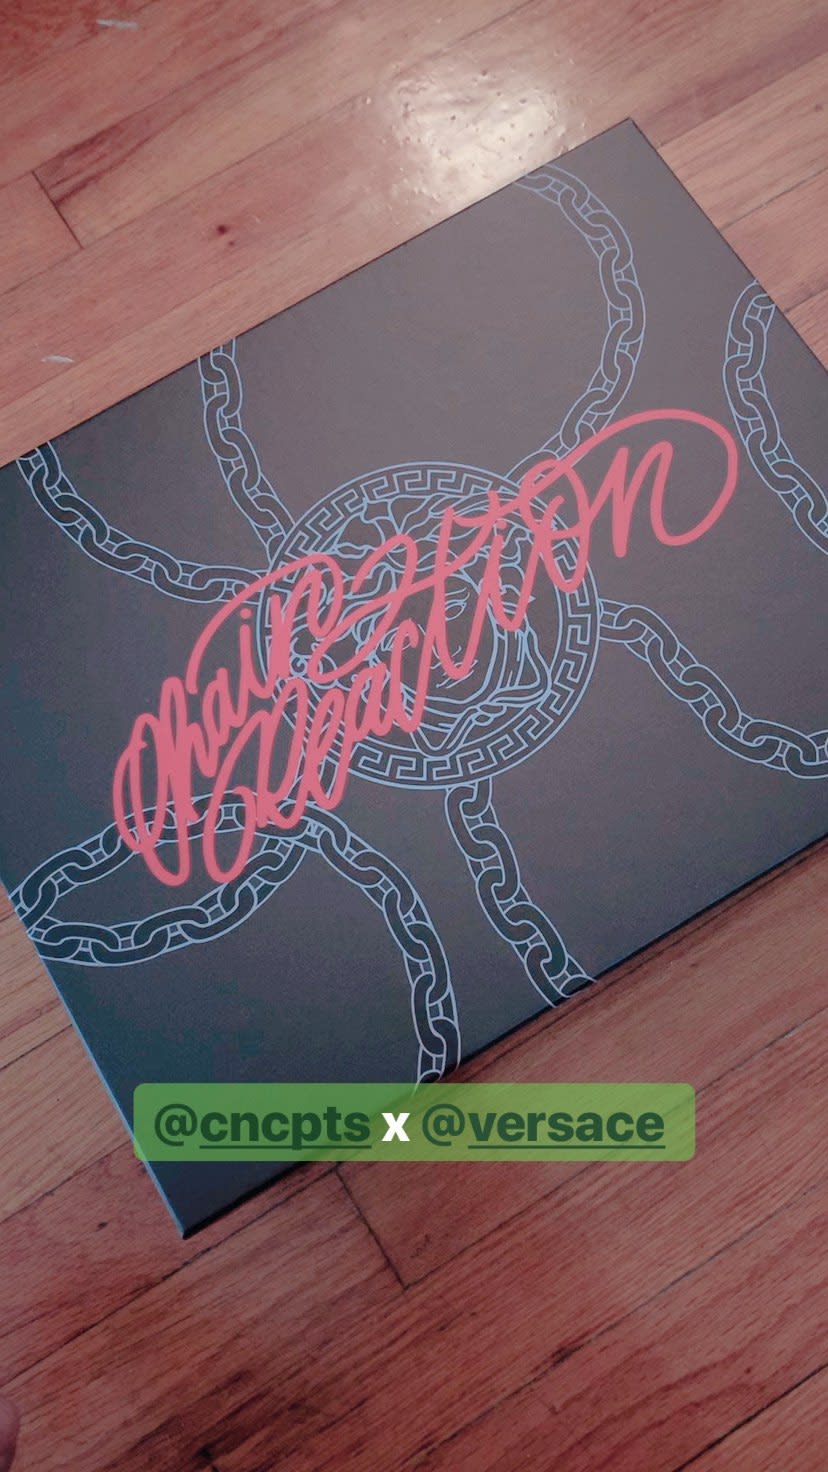 Concepts x Versace Chain Reaction (Box)